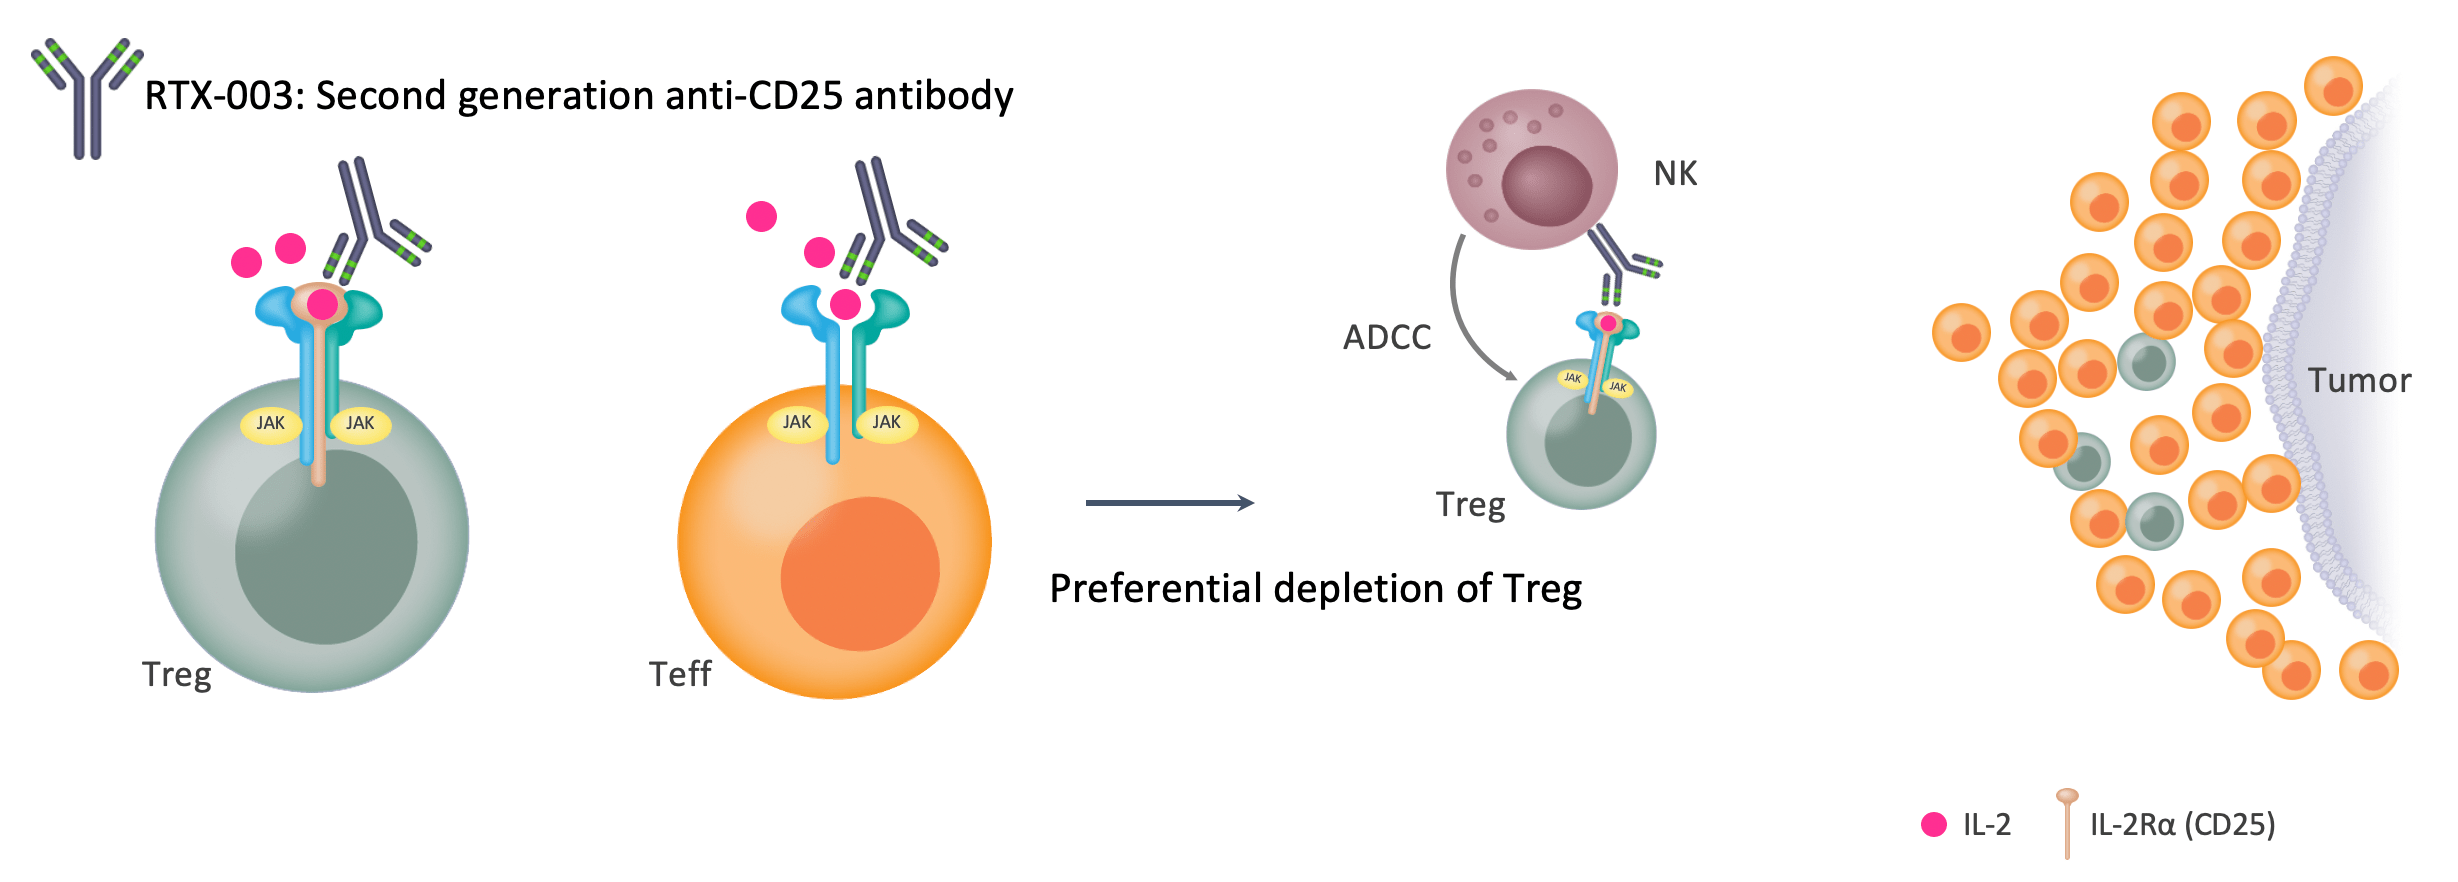 RTX-003 preferential depletion of T-reg, described in text